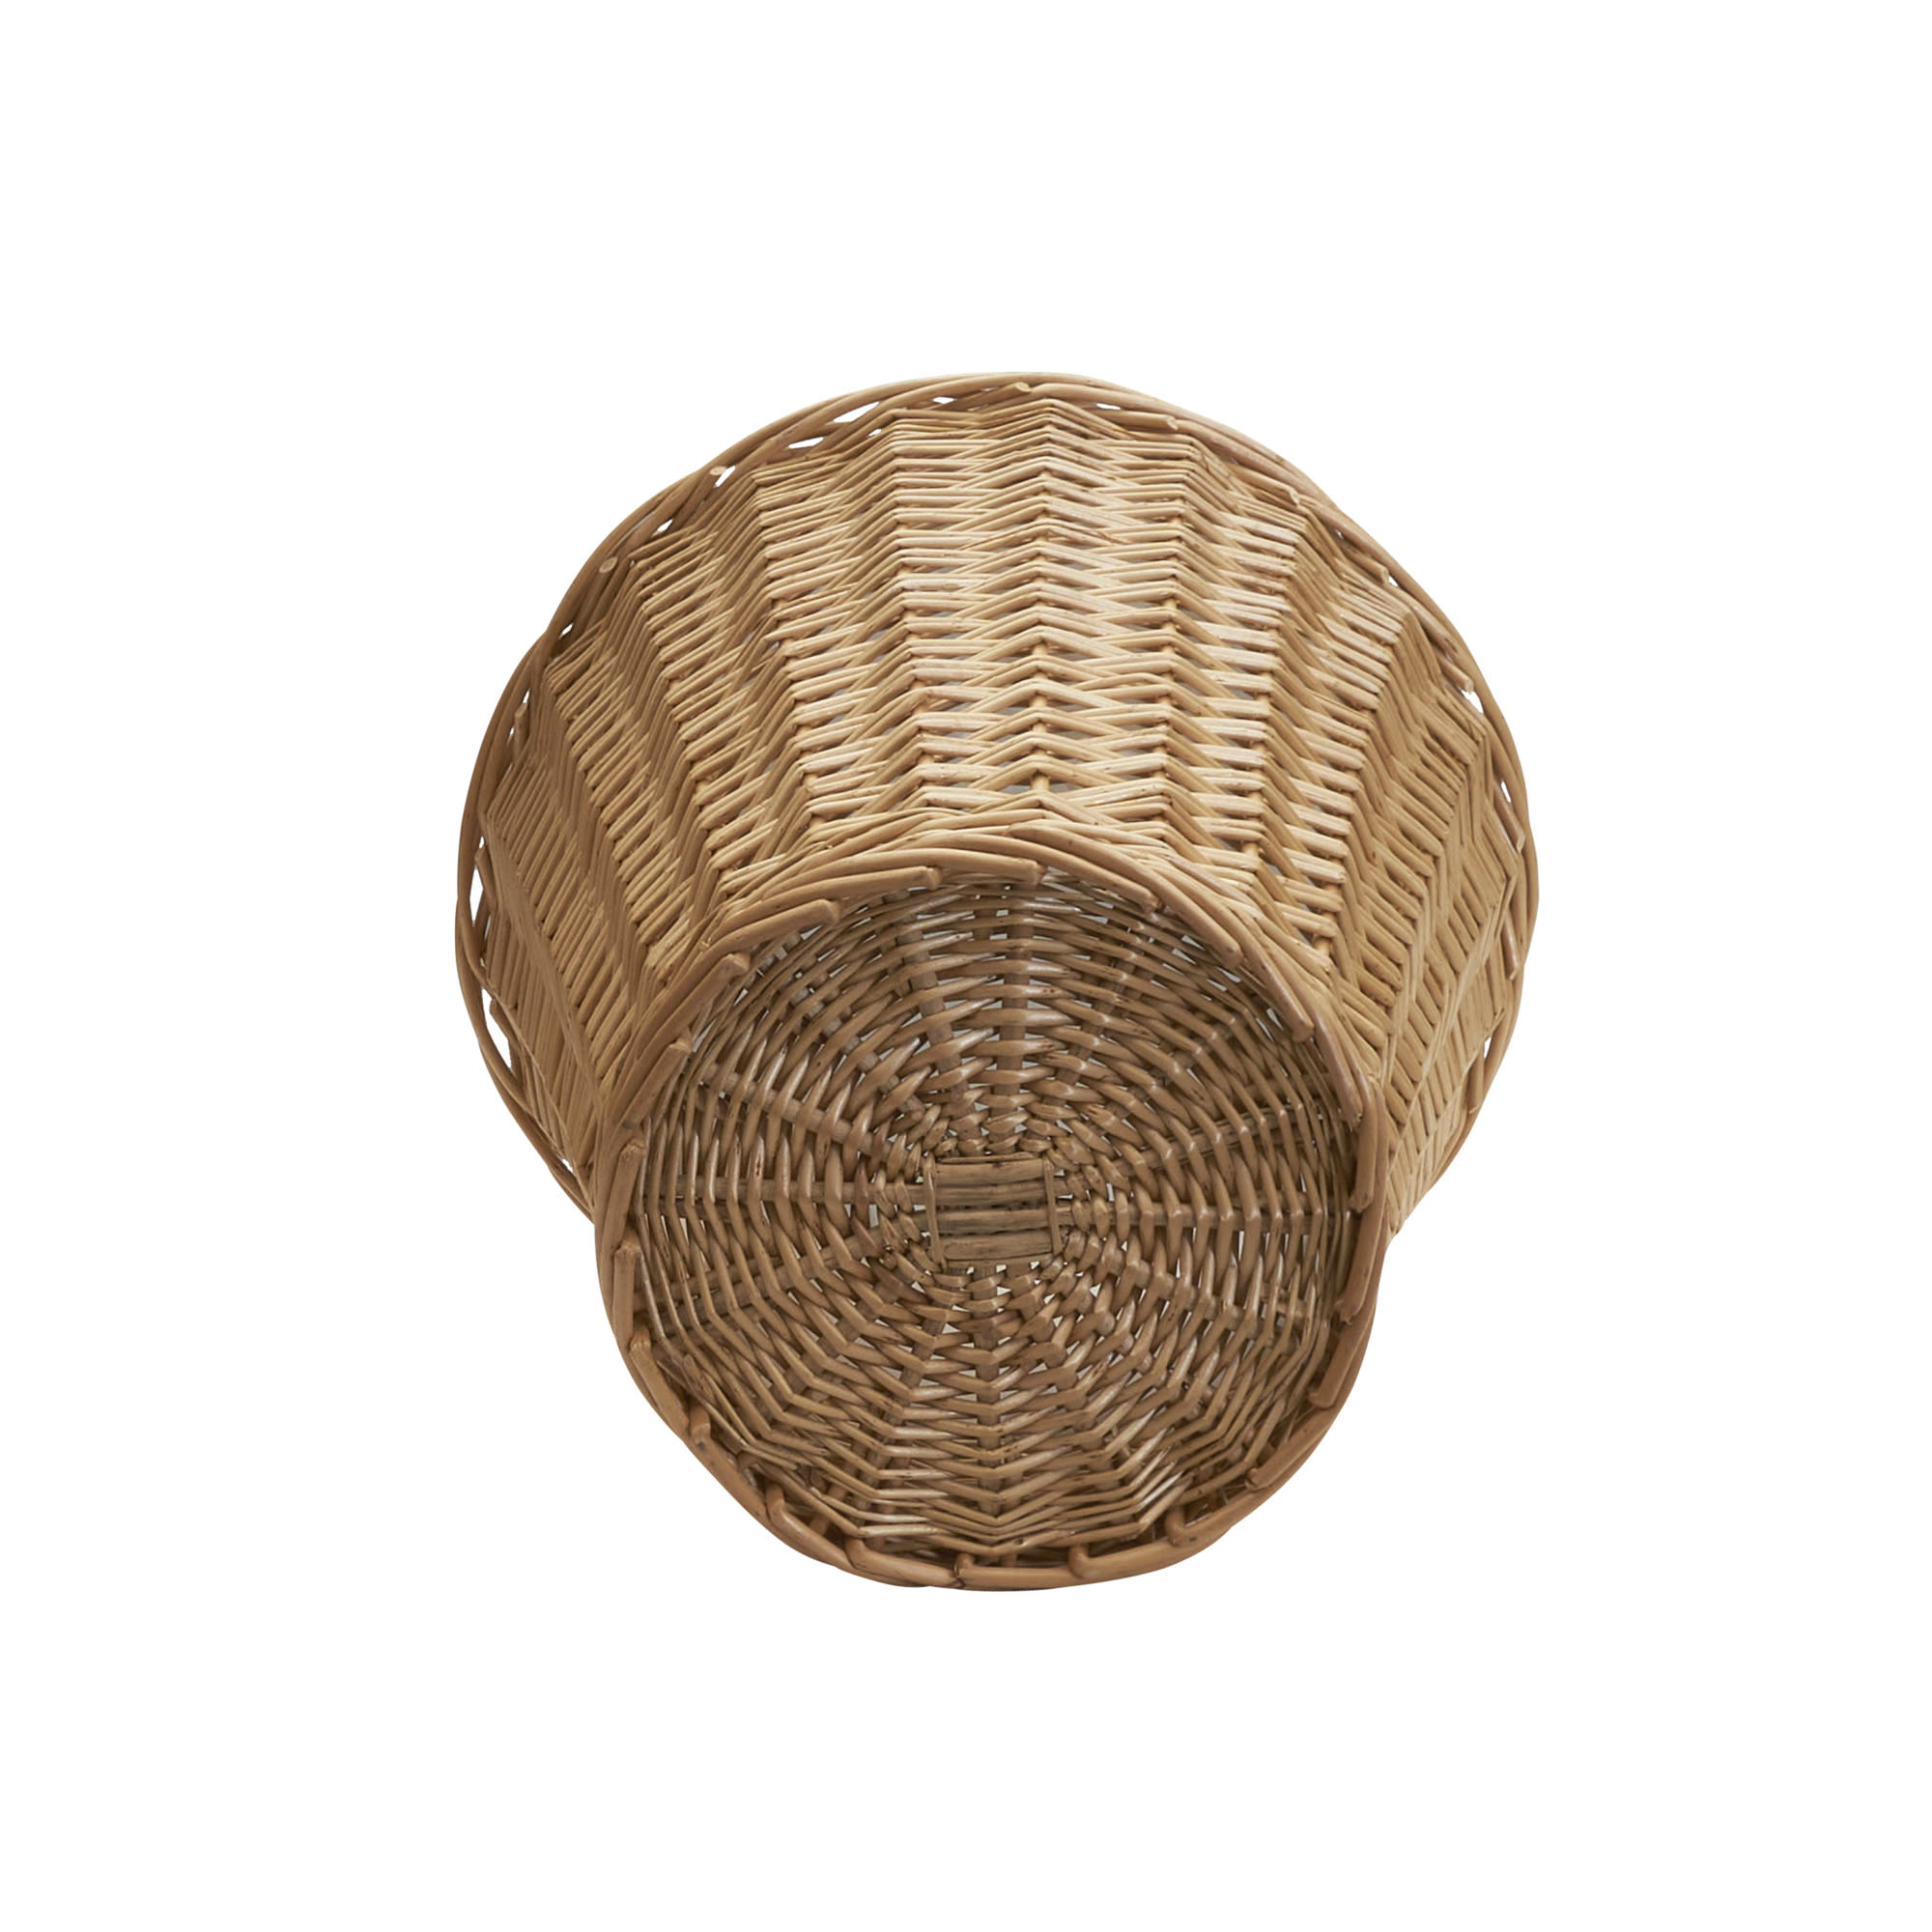 Household Essentials Medium Willow Waste Basket - image 3 of 5